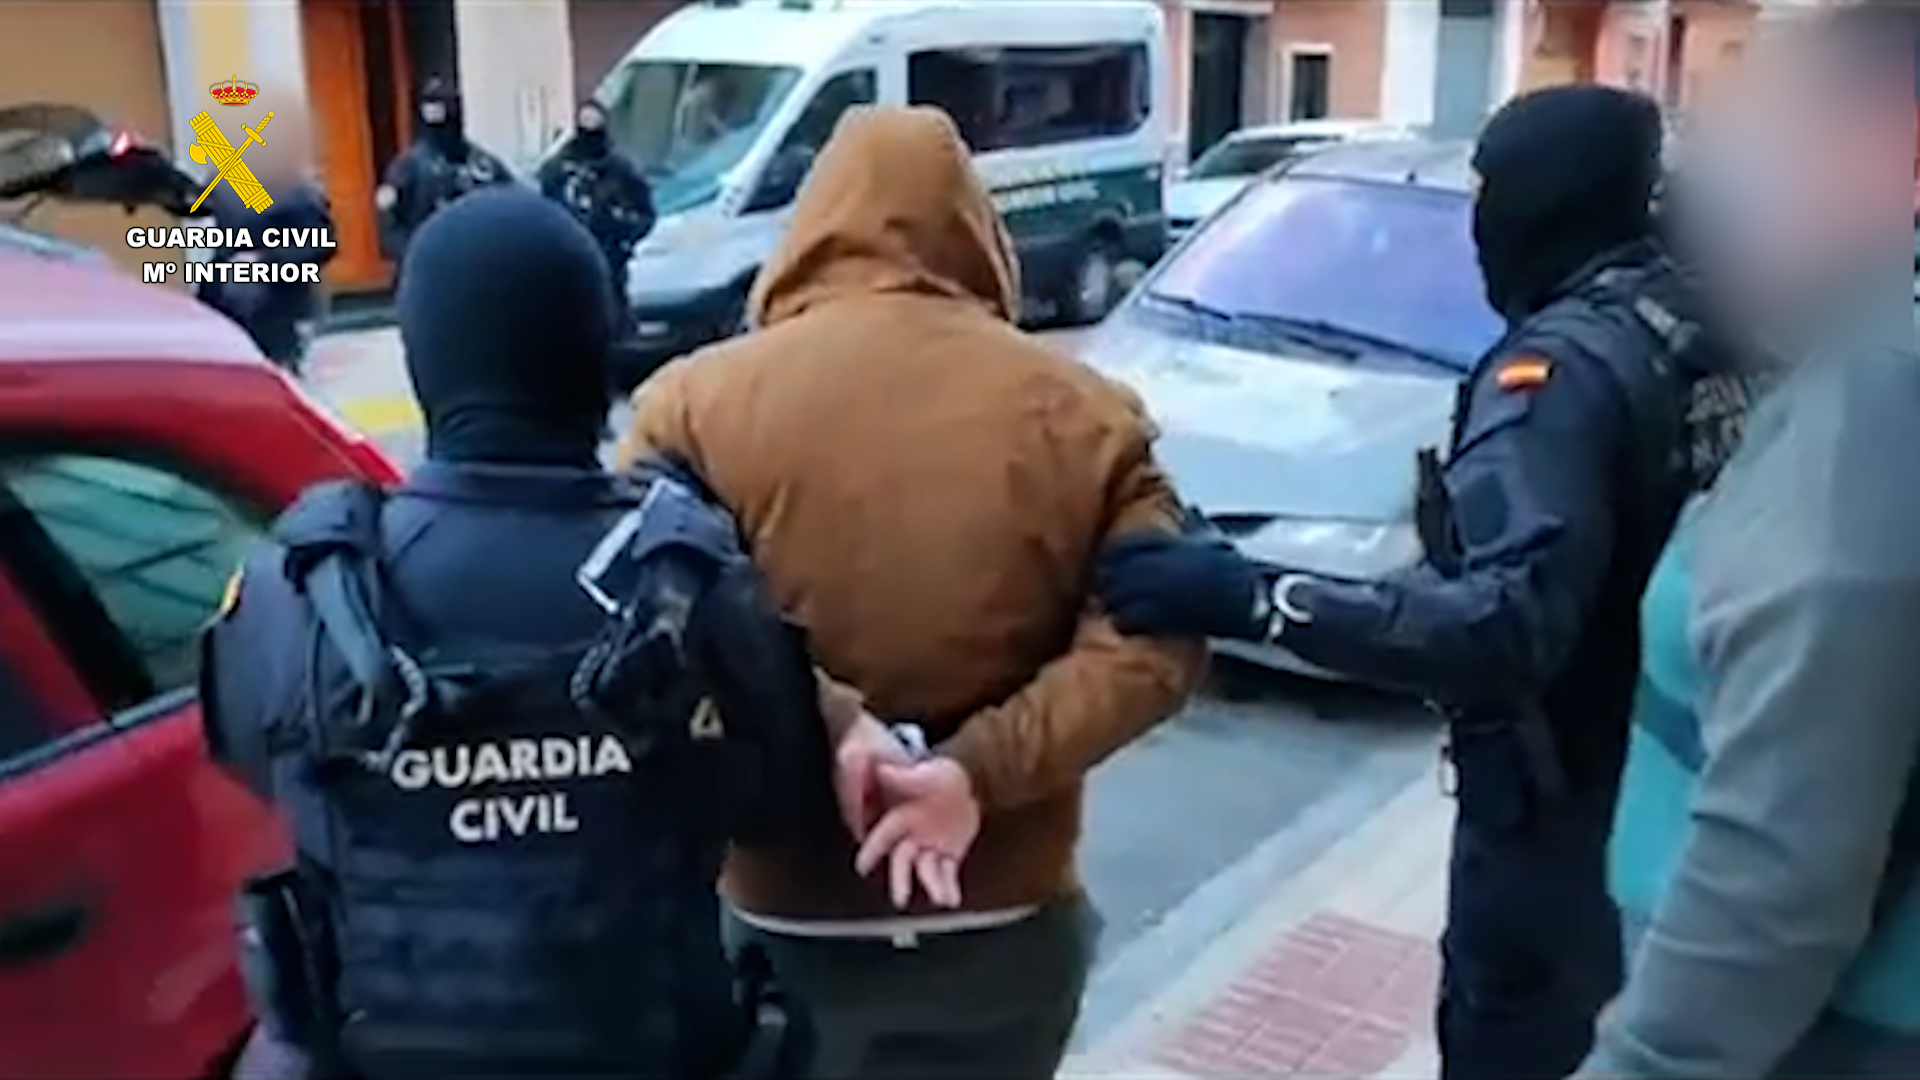 Cinco detenidos por introducir en Algeciras 150 kilos de cocaína oculta en dobles fondos de muebles desde Sudamérica